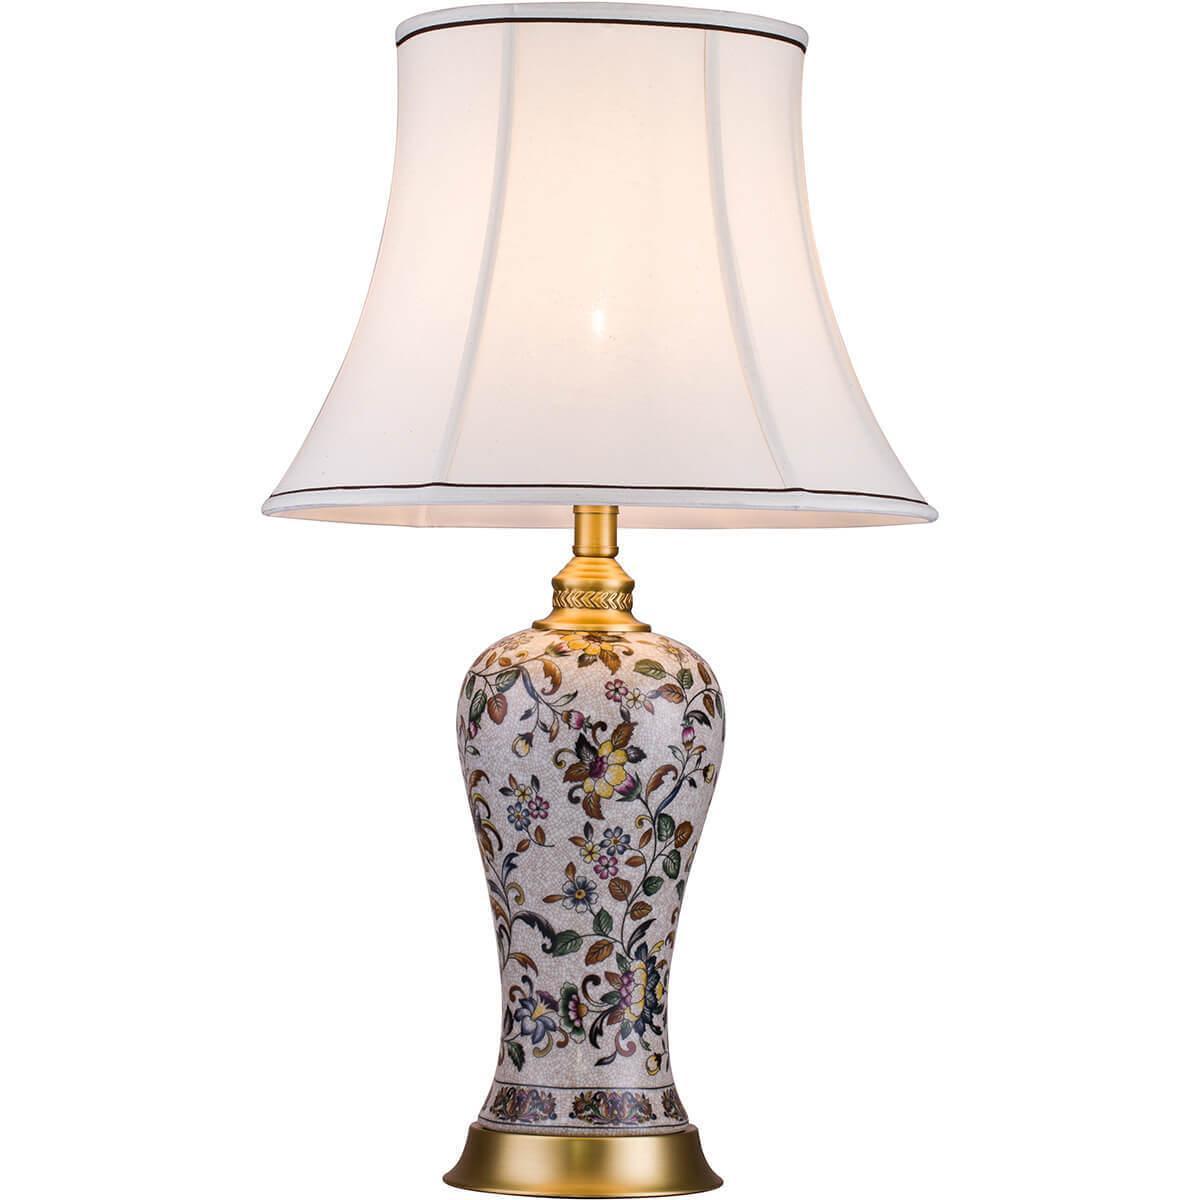 Настольная лампа Lucia Tucci Harrods T933.1 подвесная люстра lucia tucci barletta 122 12 6 coffe gold